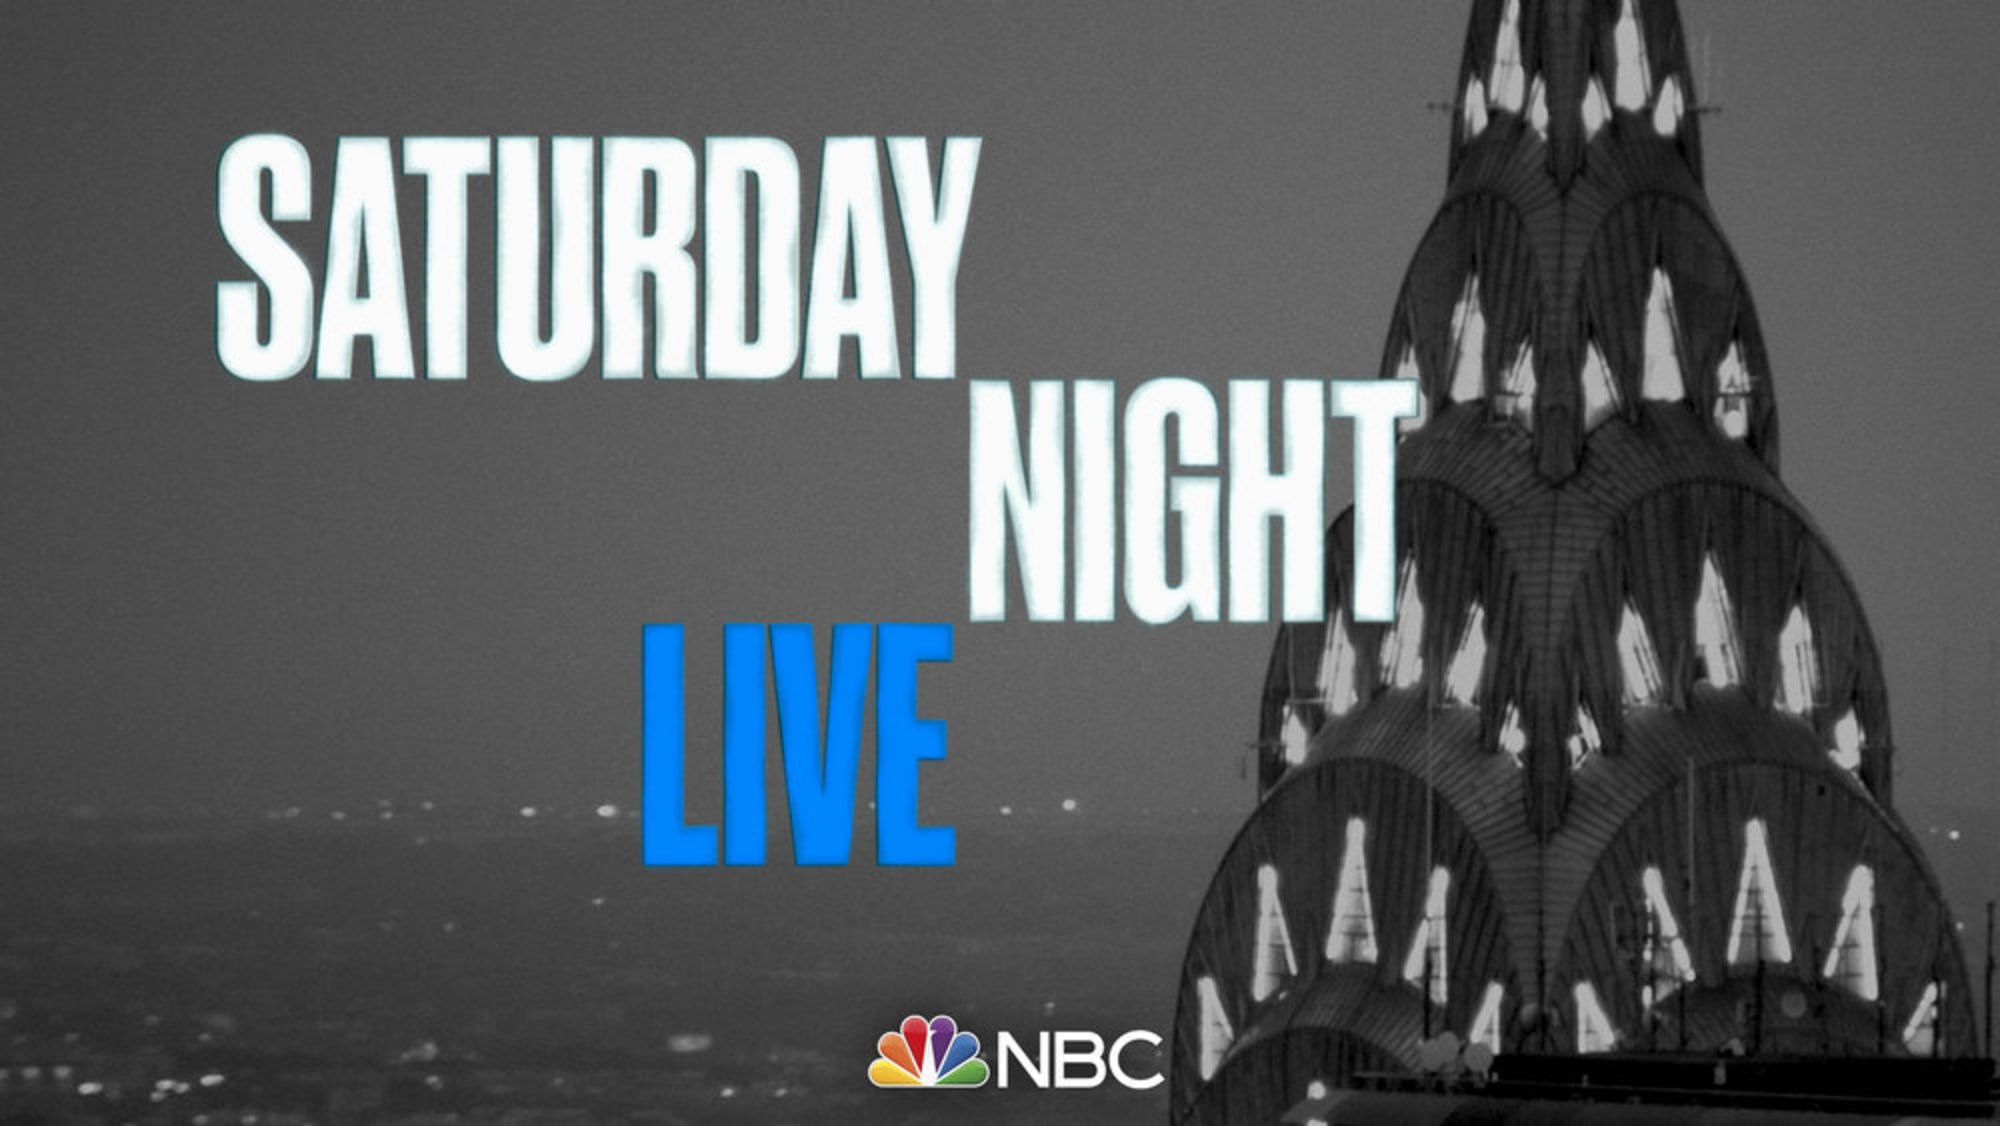 Who’s hosting Saturday Night Live tonight, May 7?